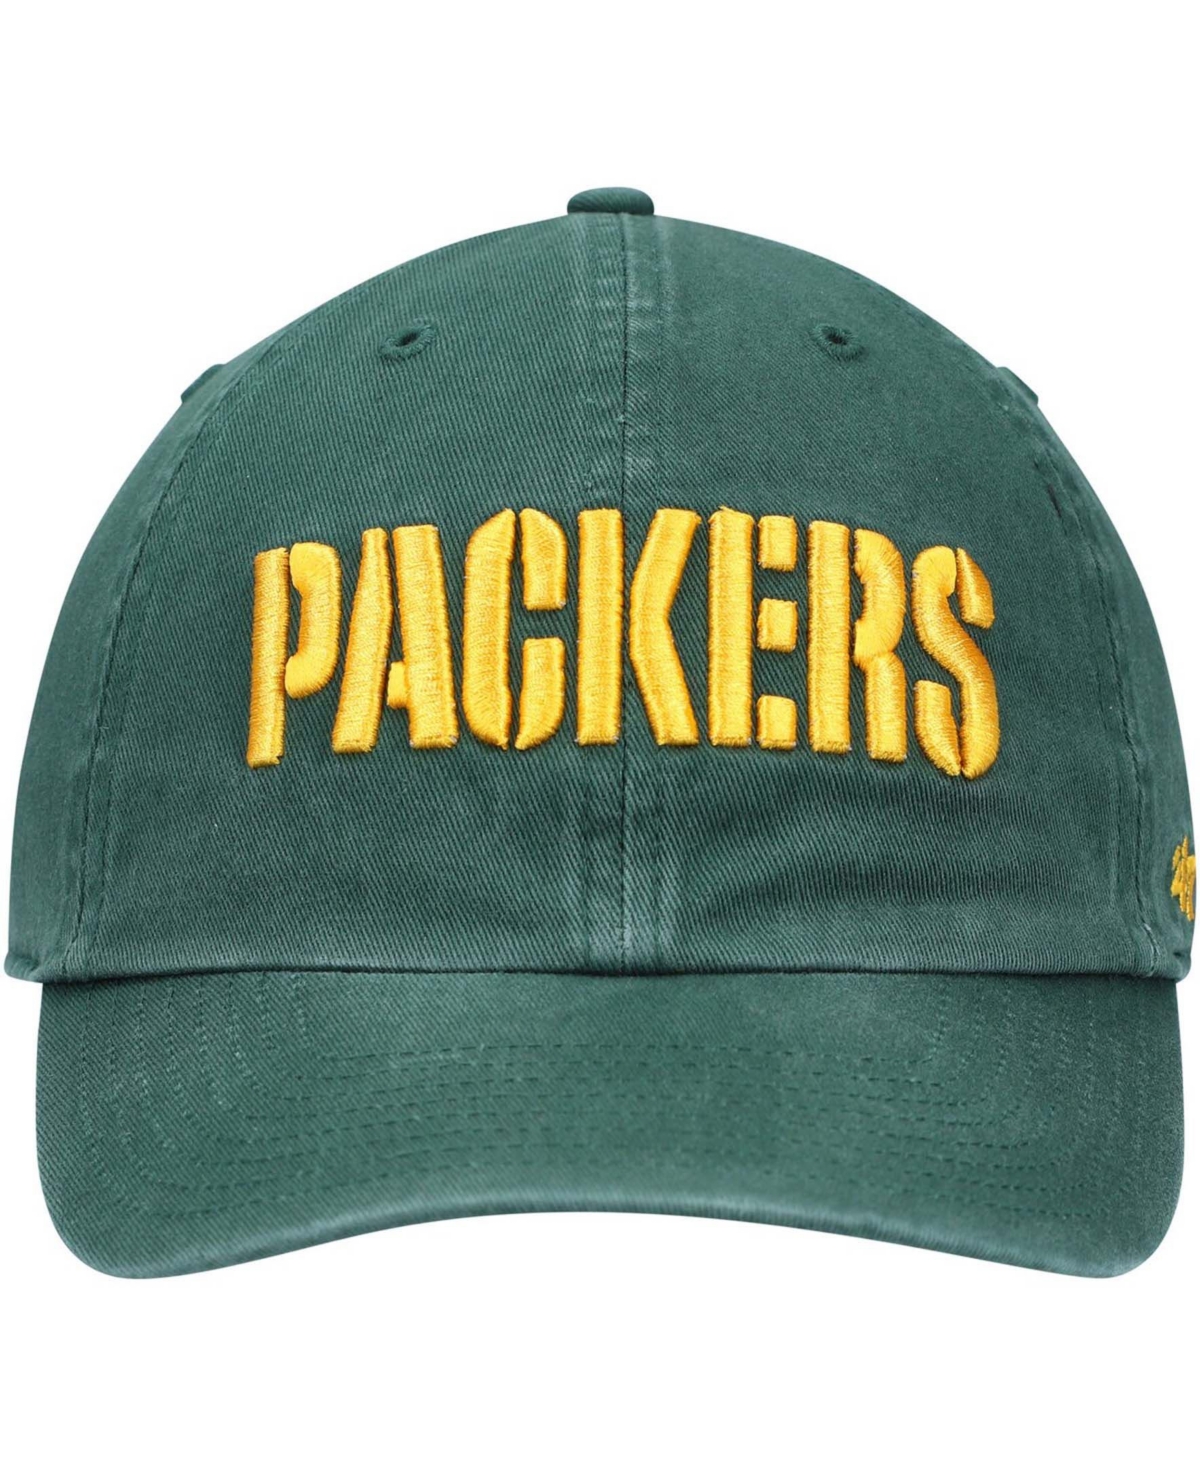 Shop 47 Brand Men's Green Green Bay Packers Clean Up Script Adjustable Hat